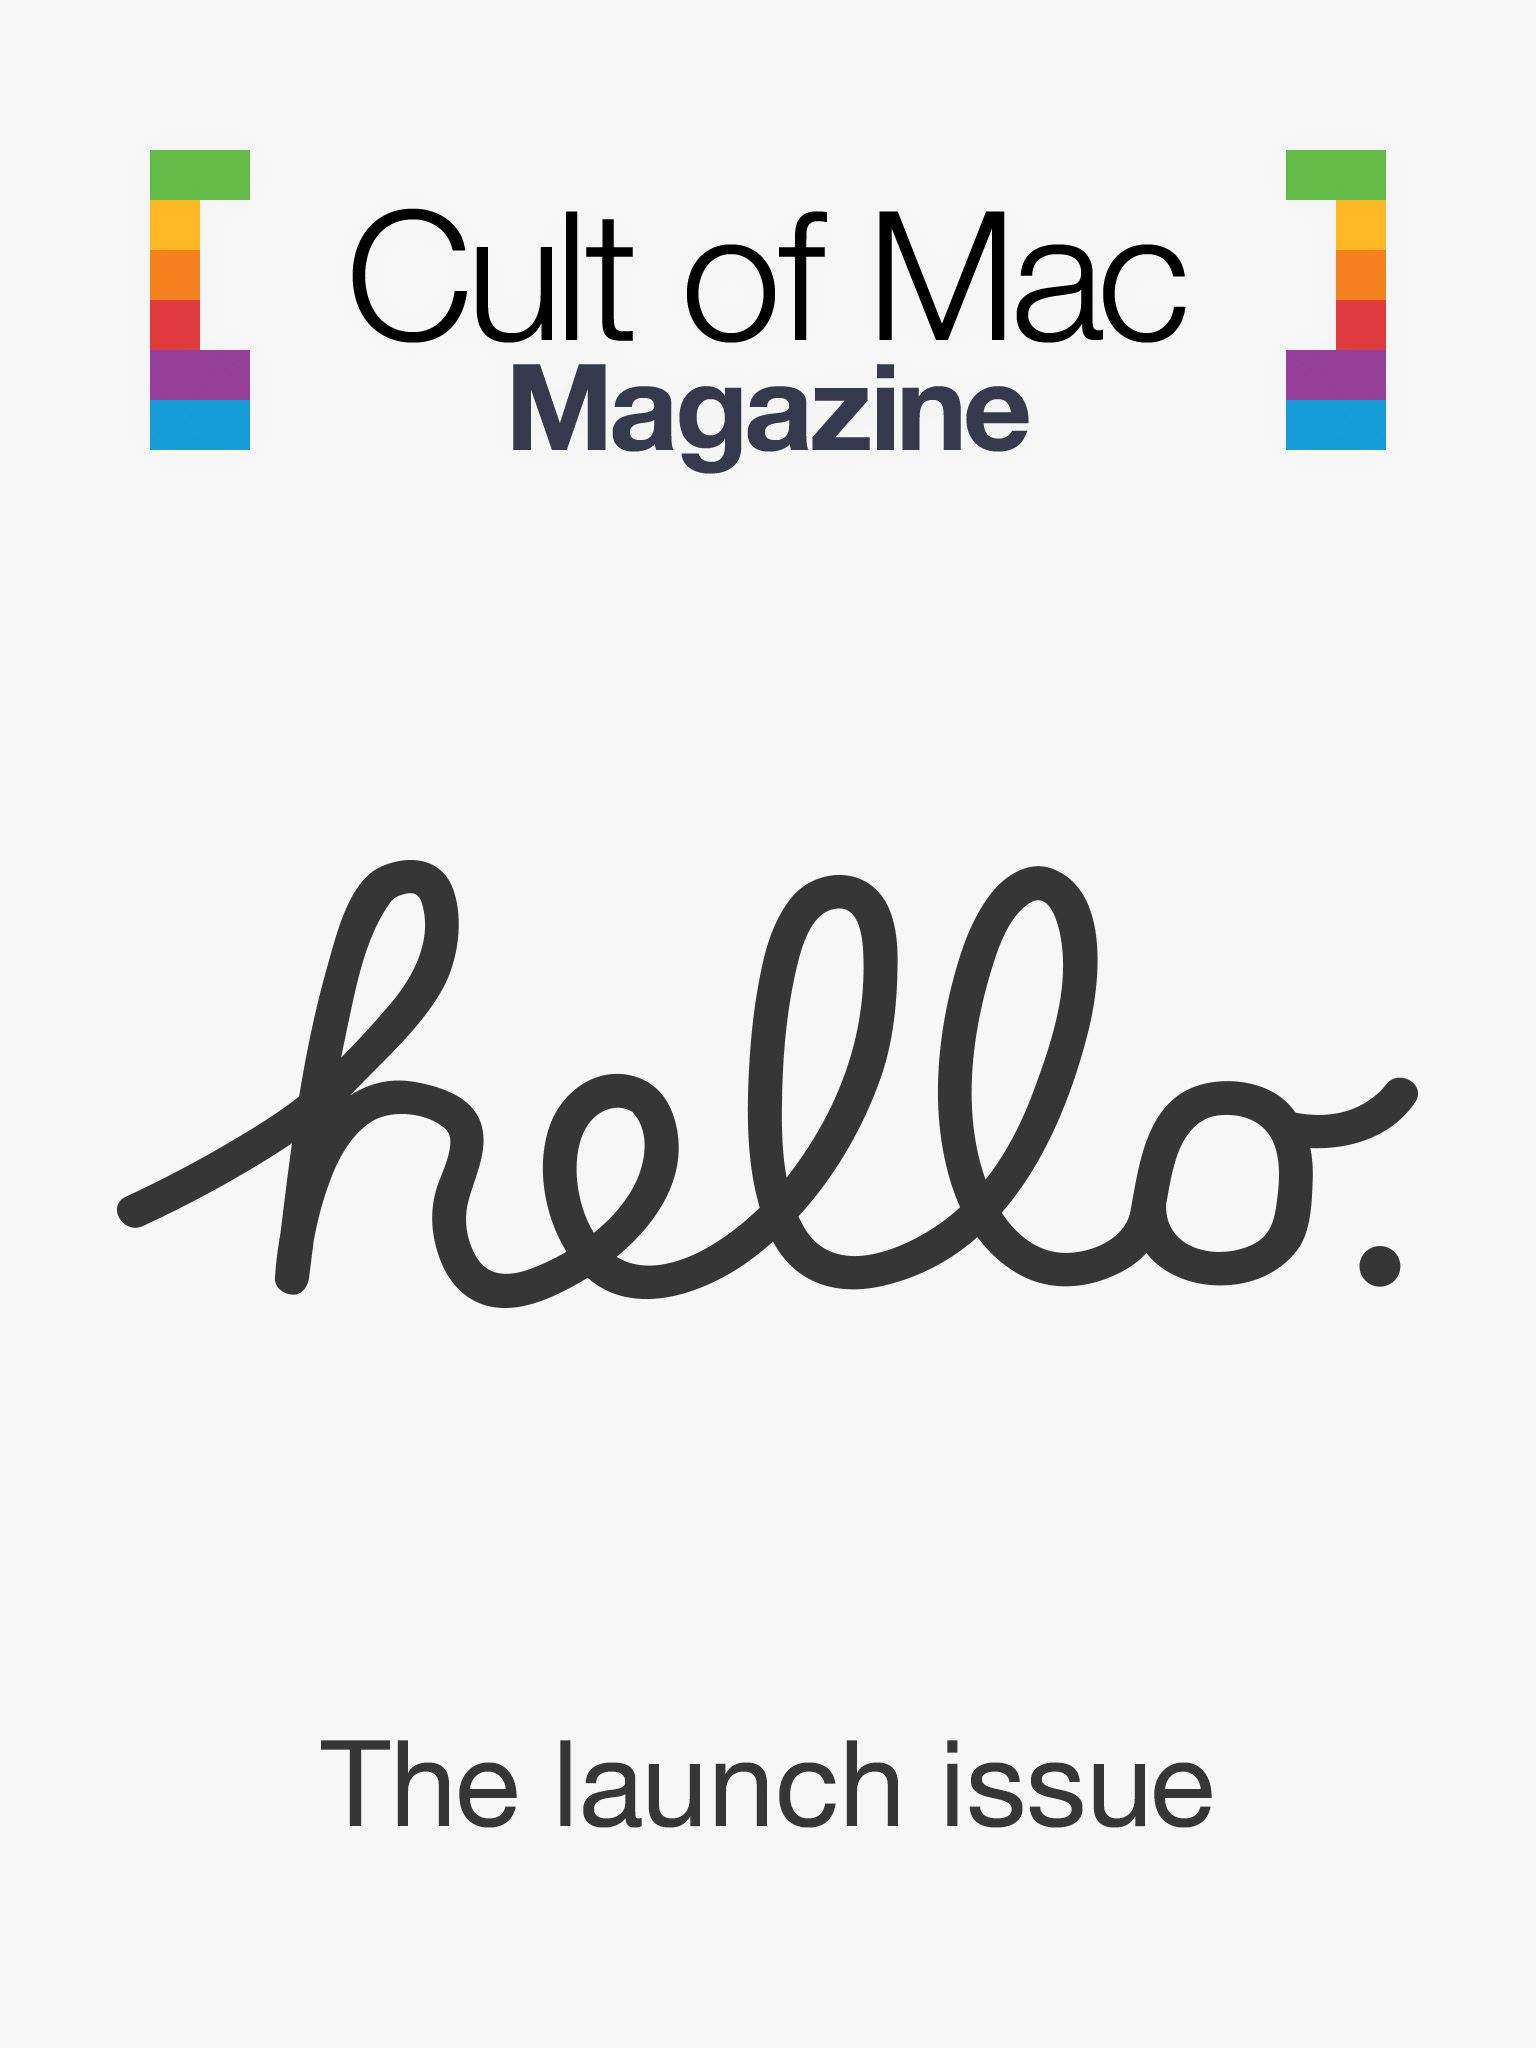 Cult of Mac Magazine, the Hello World Issue